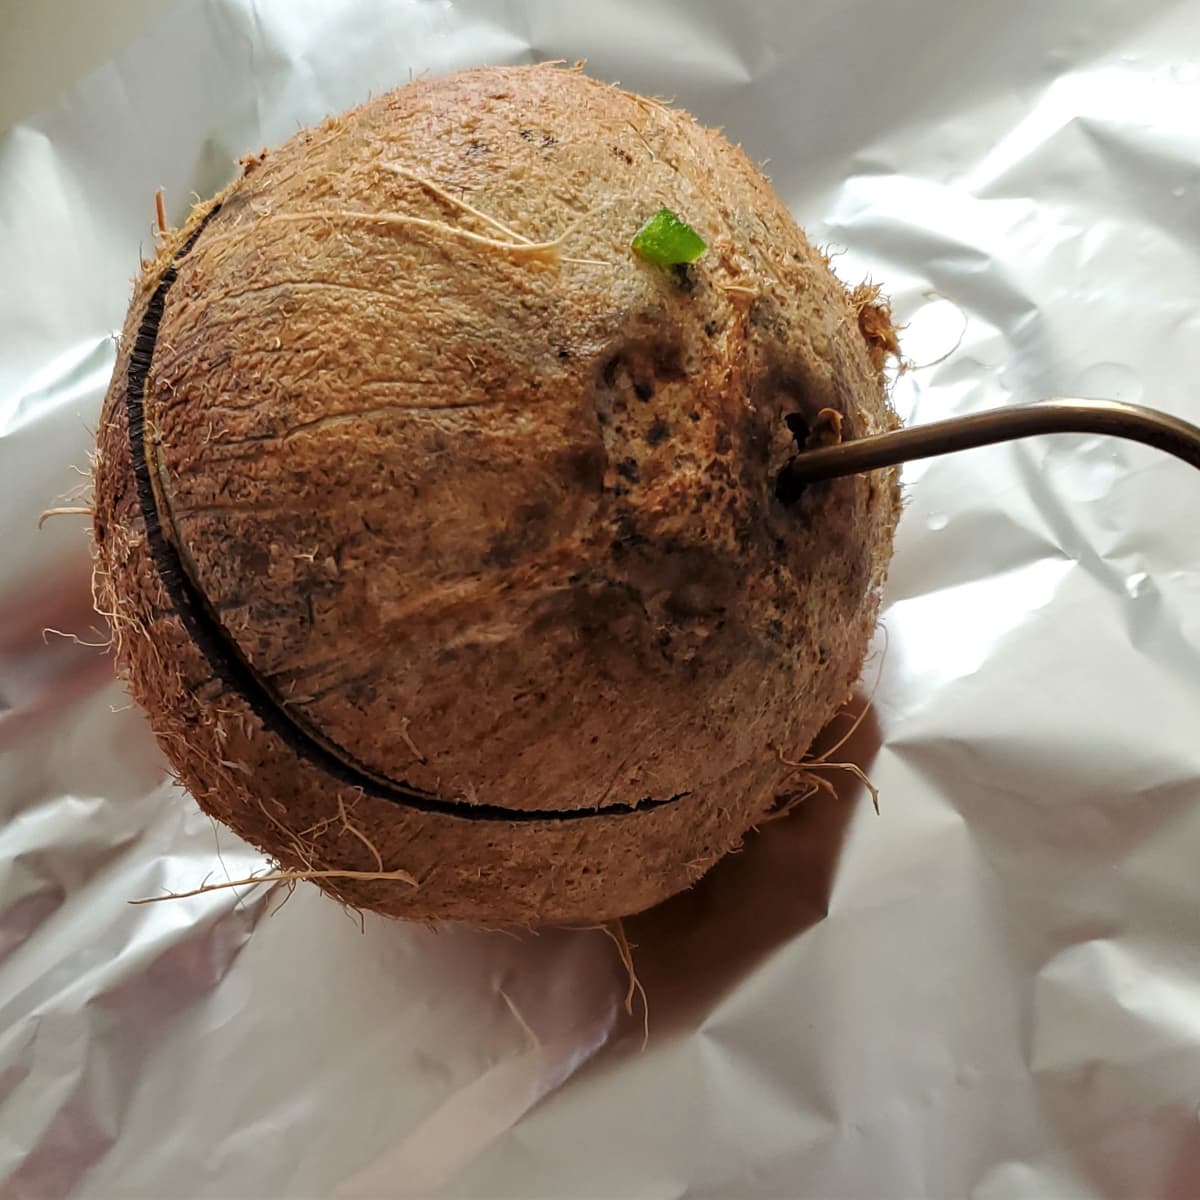 Temp probe in a stuffed coconut.